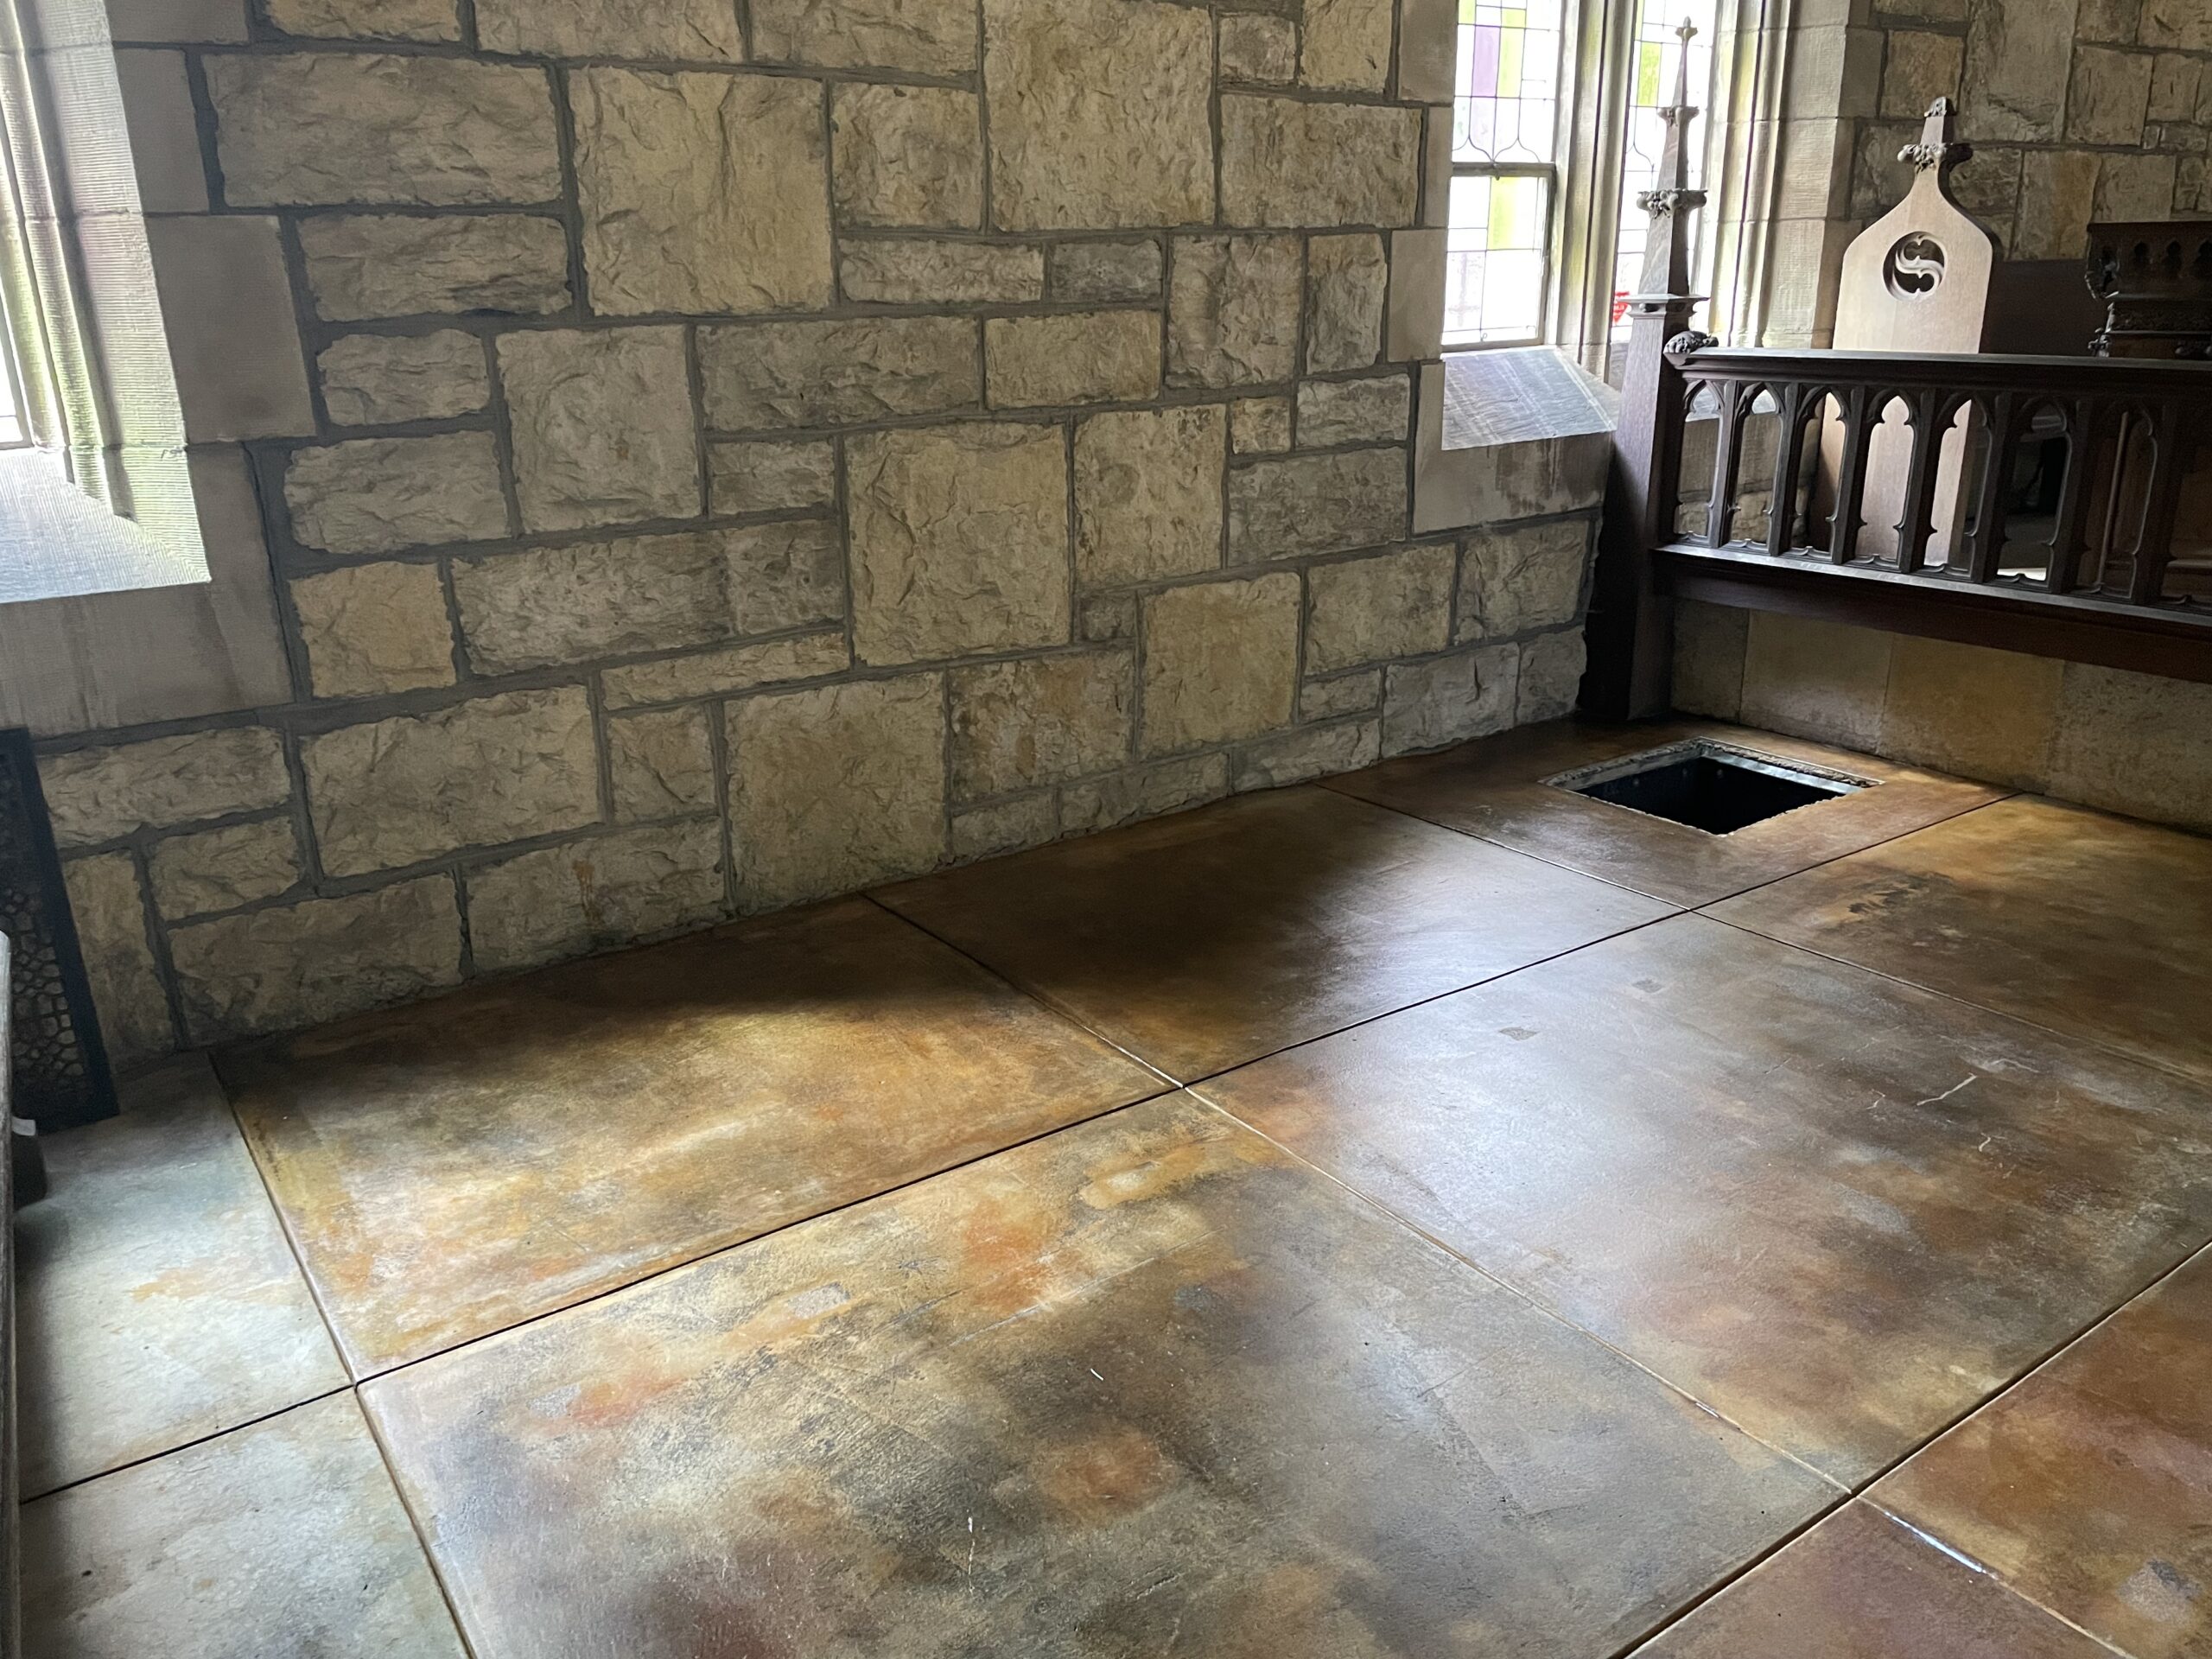 Staining church chapel concrete floor